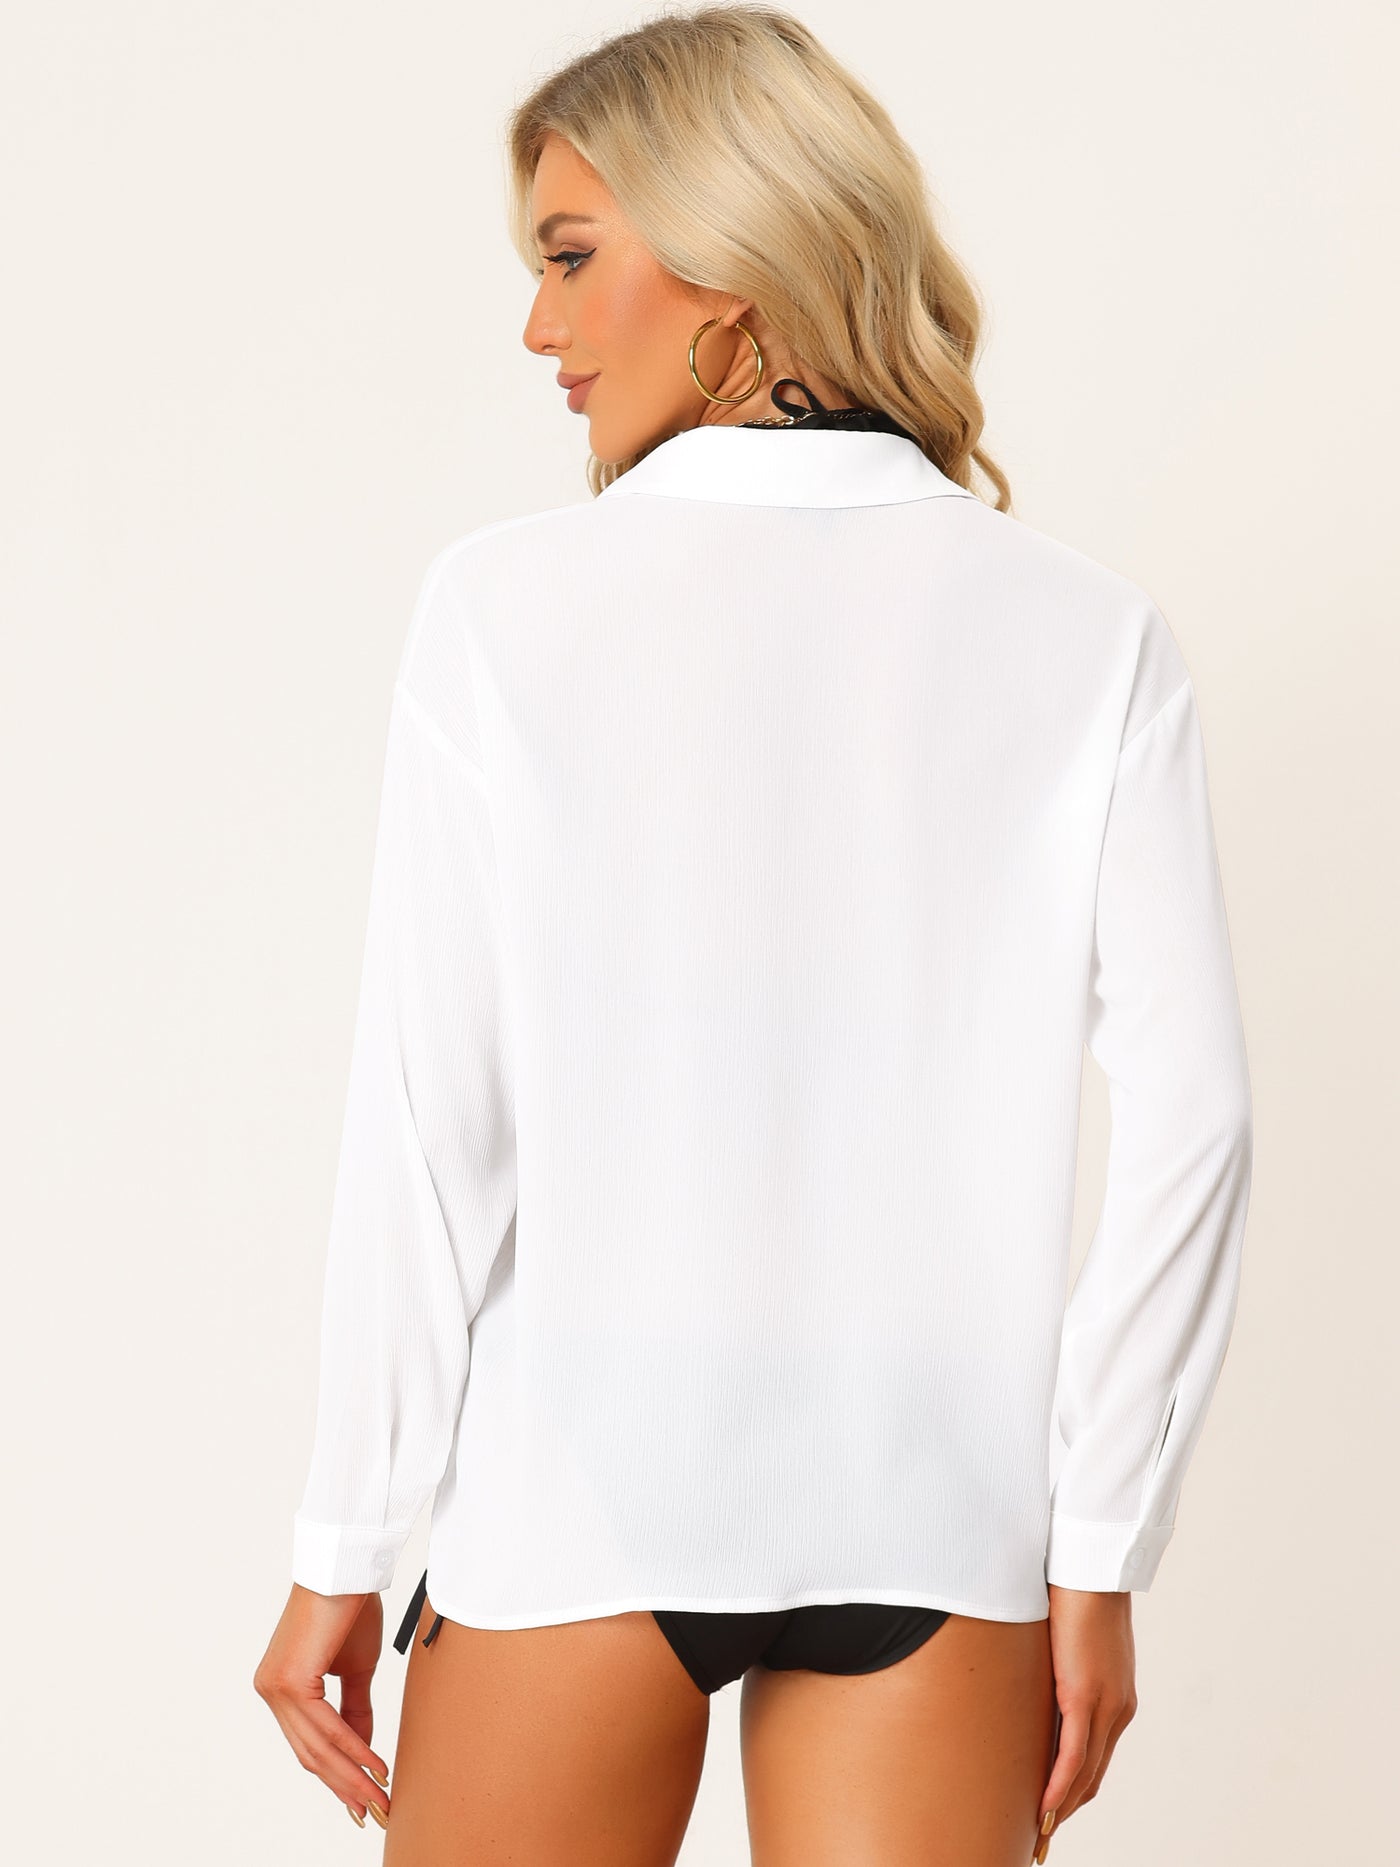 Allegra K Sheer Blouse Button Down Long Sleeve Summer Casual Cover Up Shirt